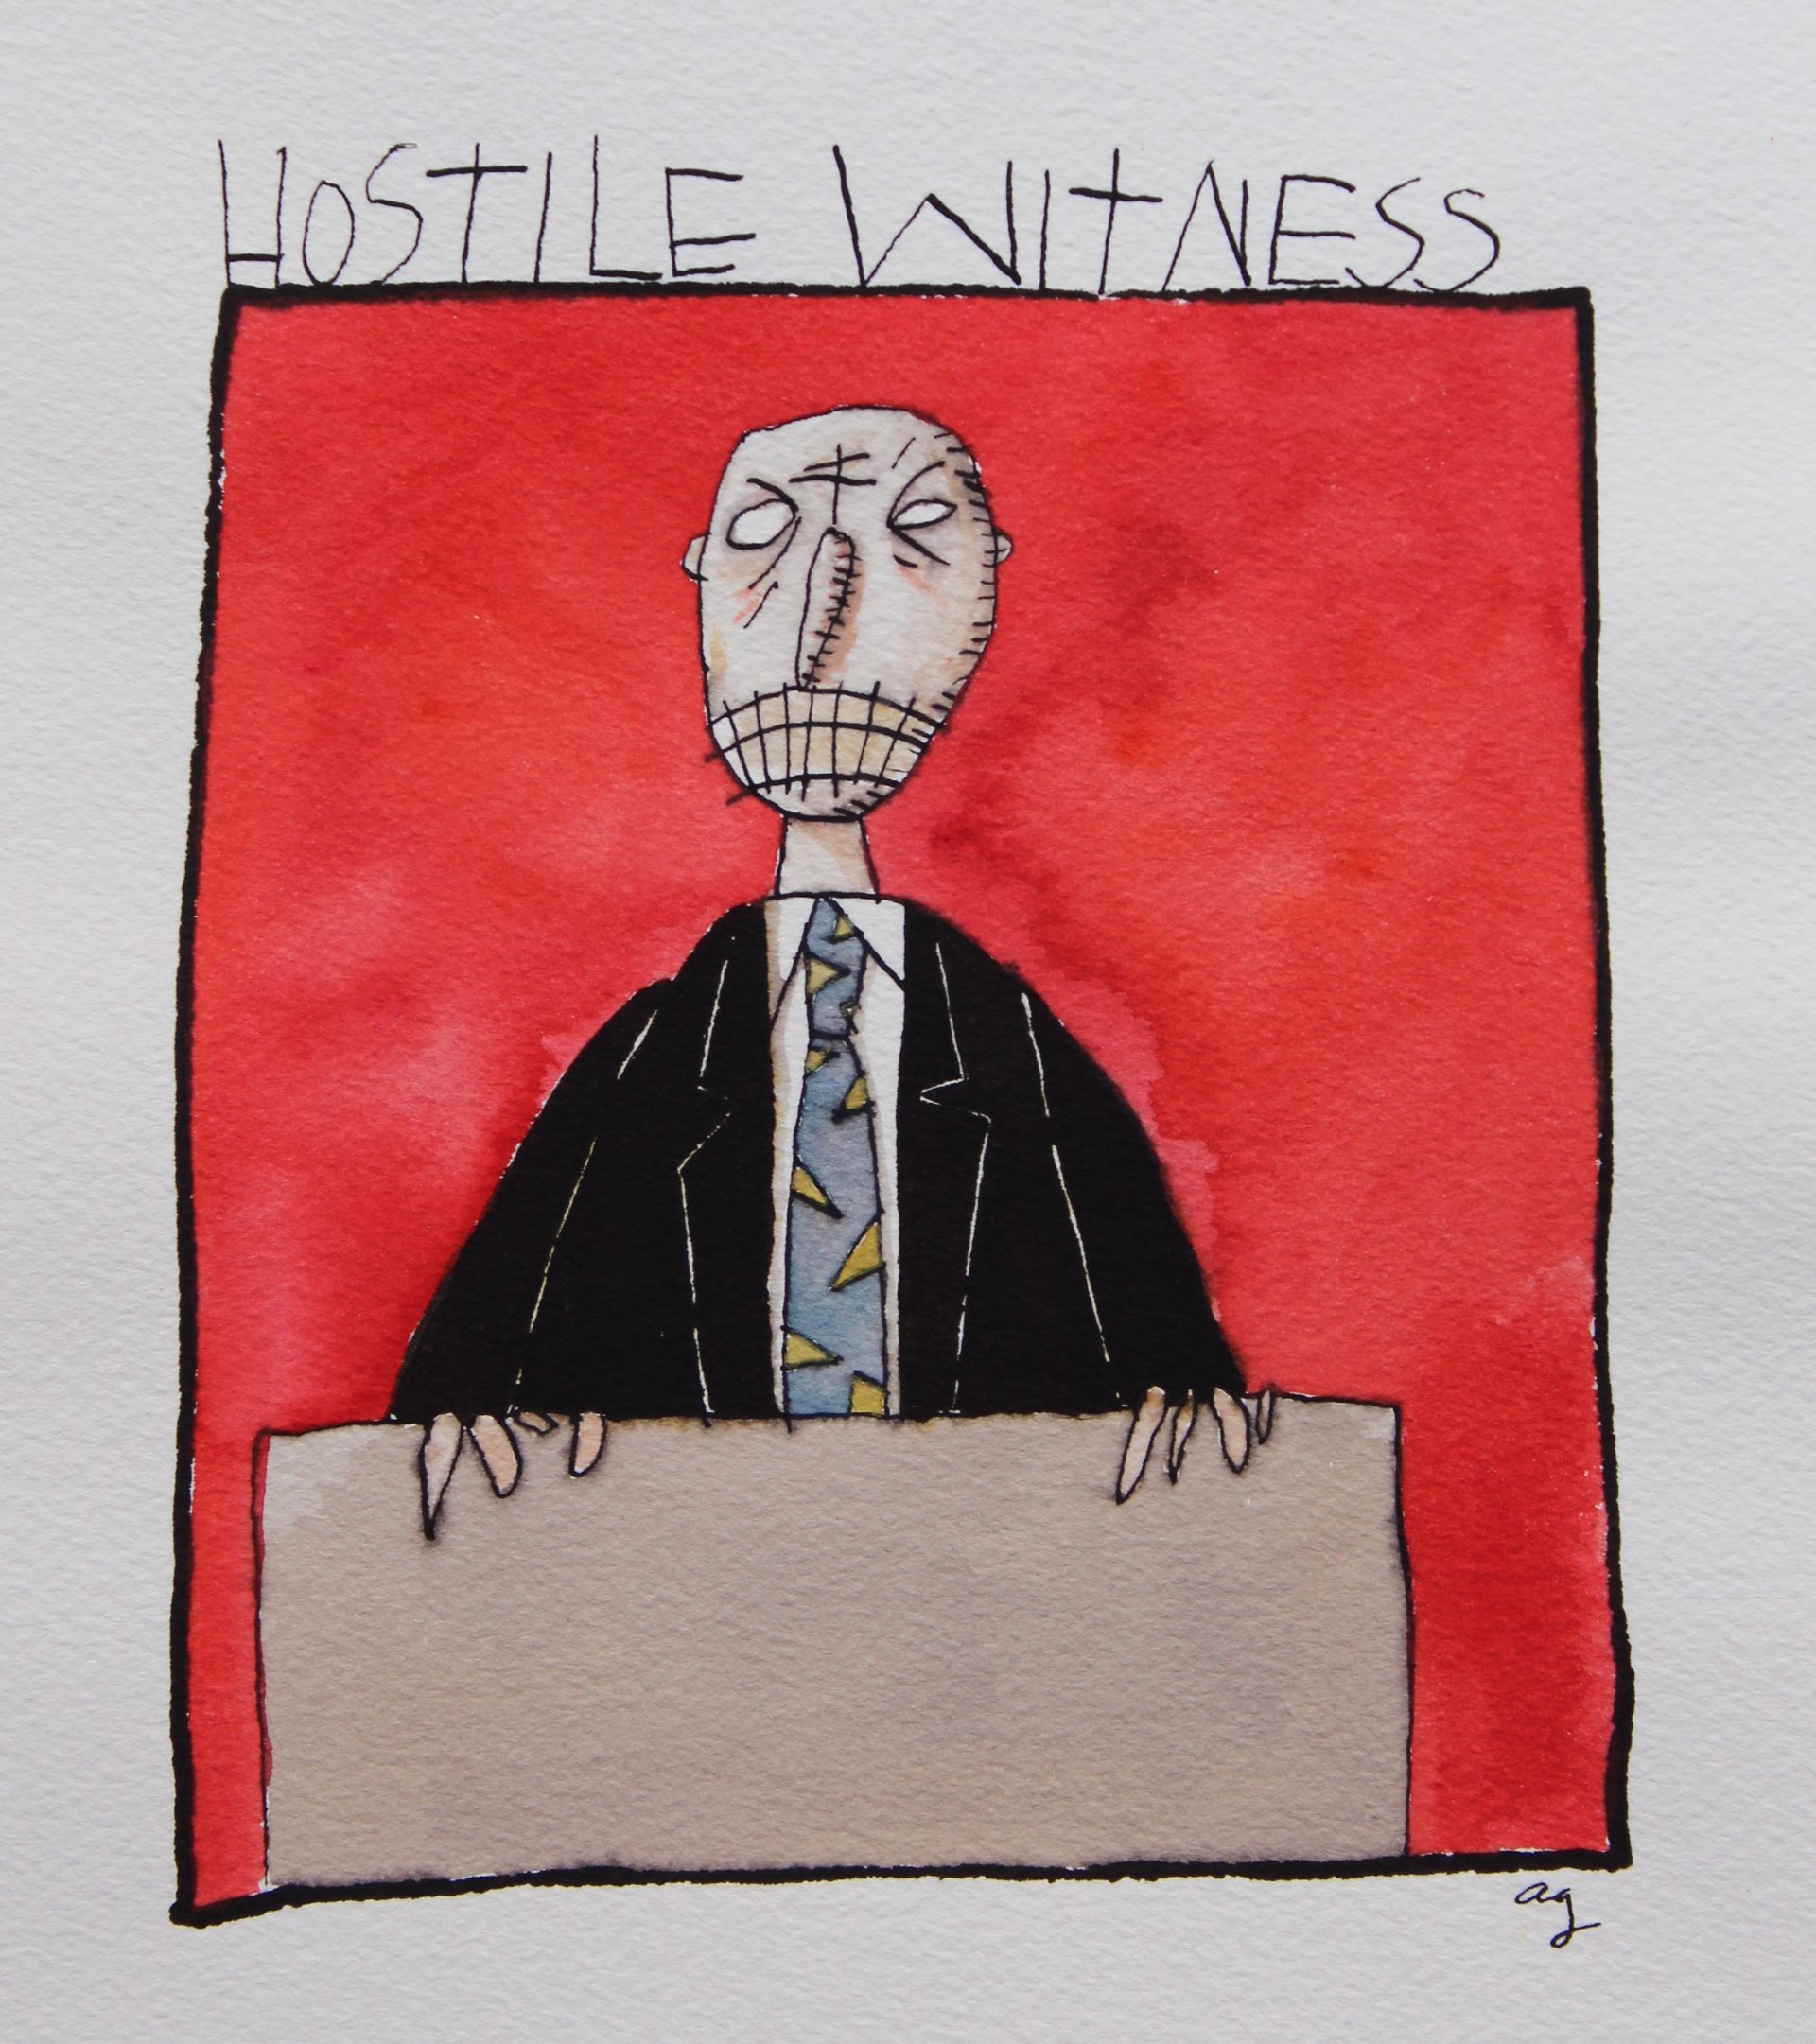 Hostile Witness by Alan Gerson